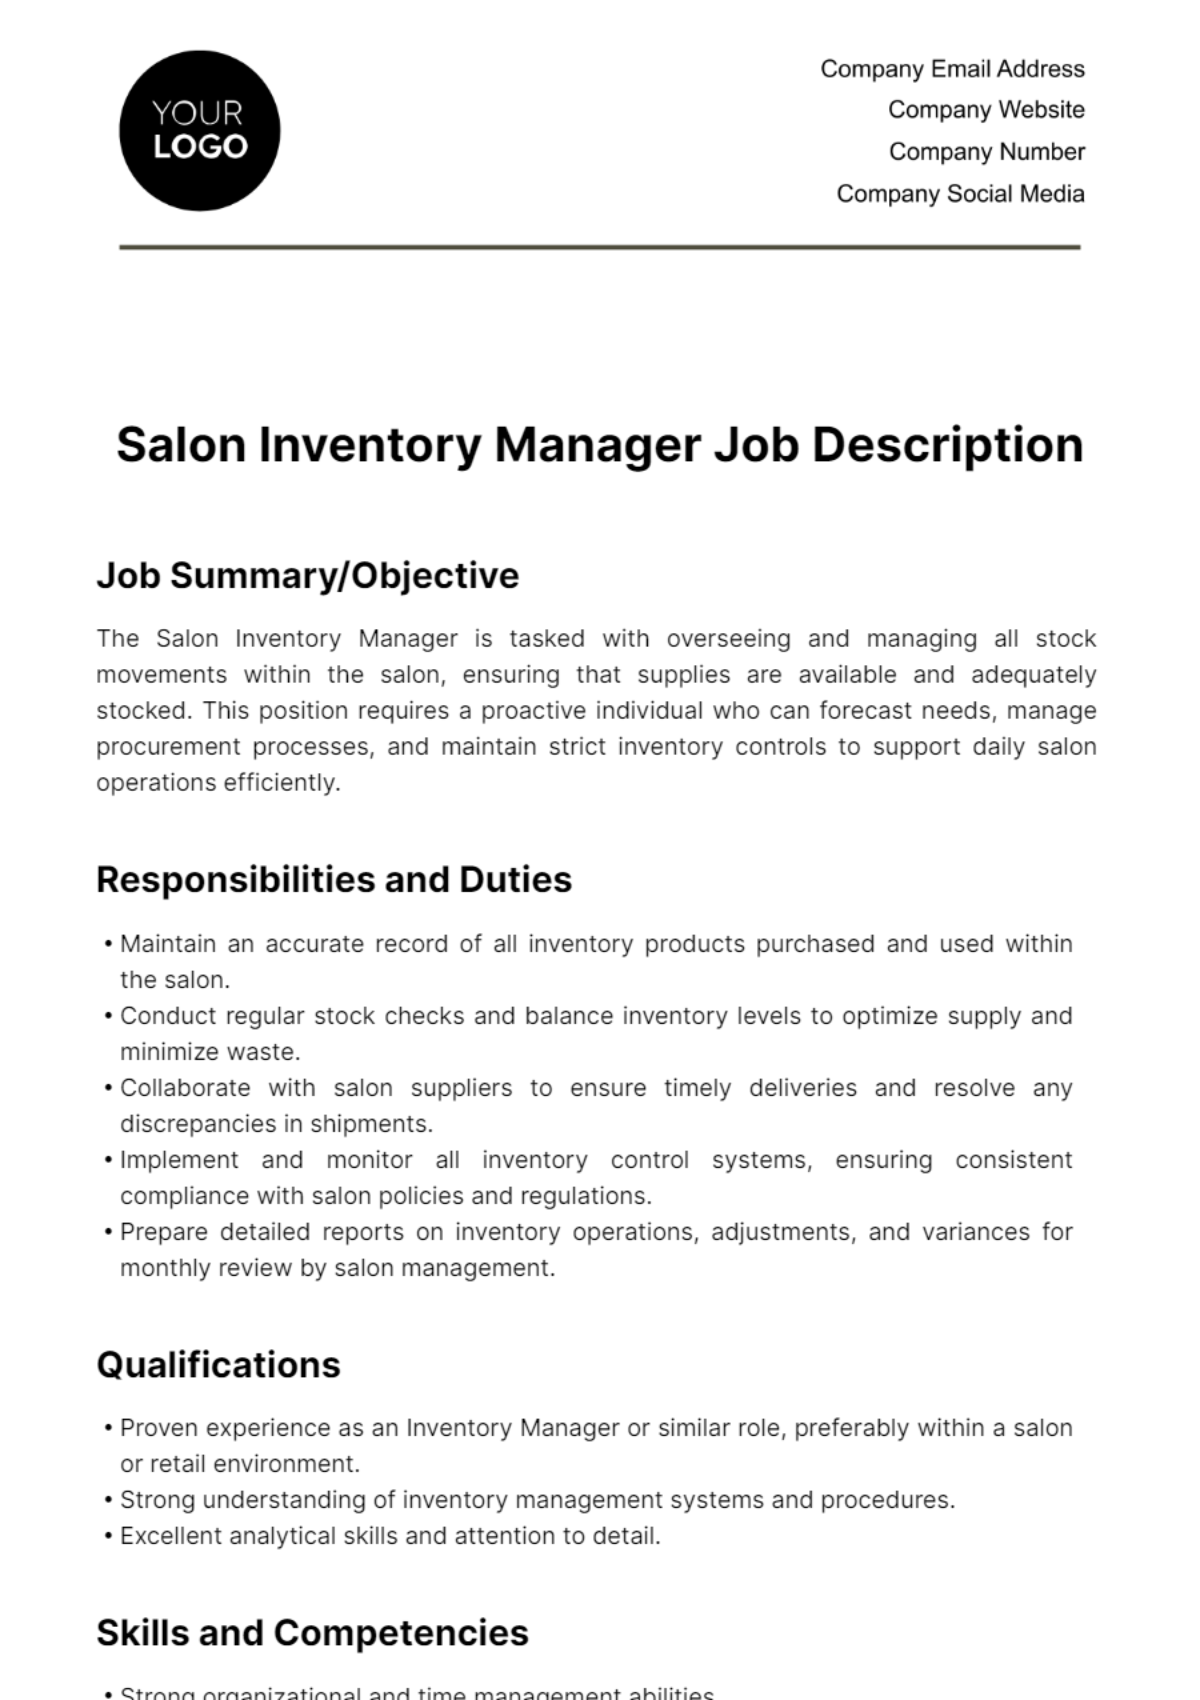 Free Salon Inventory Manager Job Description Template